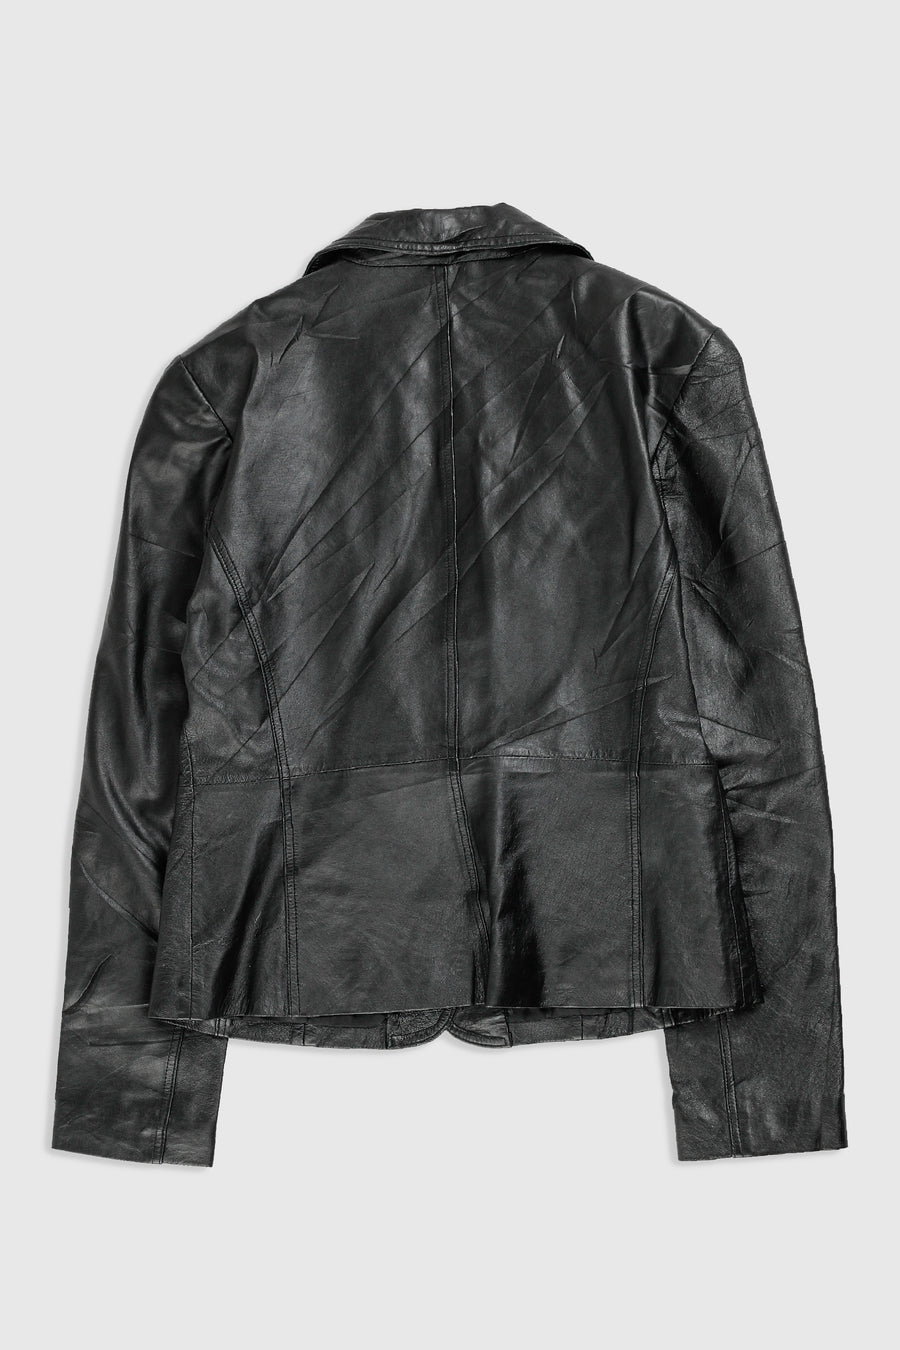 Vintage Leather Jacket - Women's XS